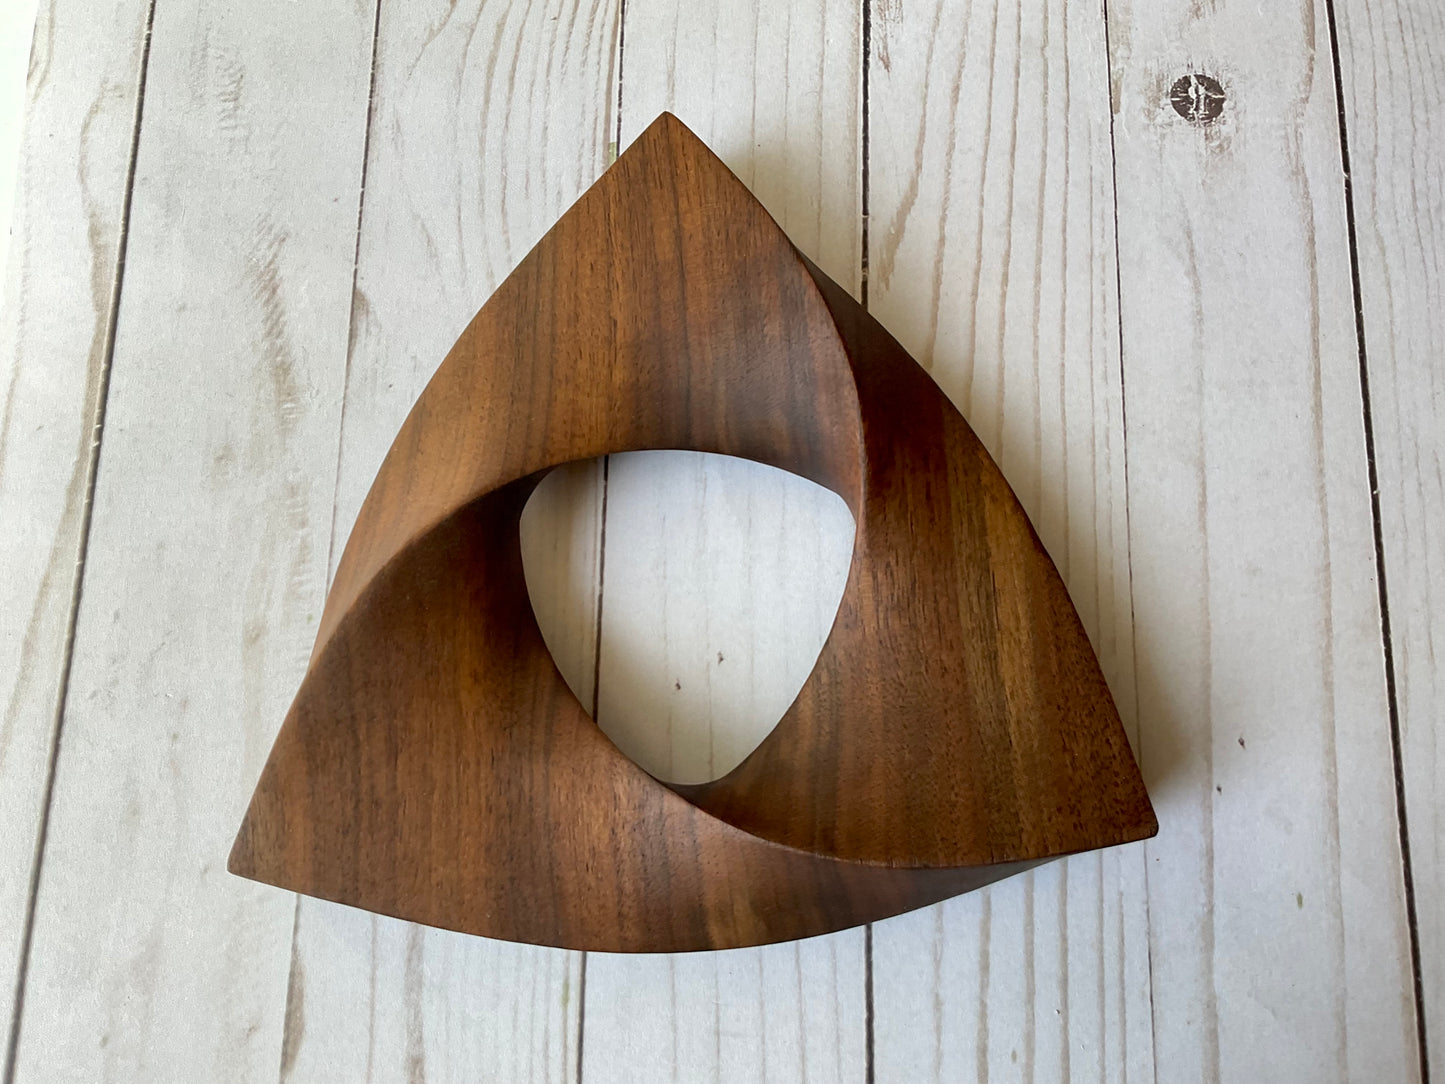 Penrose Triangle Inspired Walnut Wood Carving, 7.5 " diameter